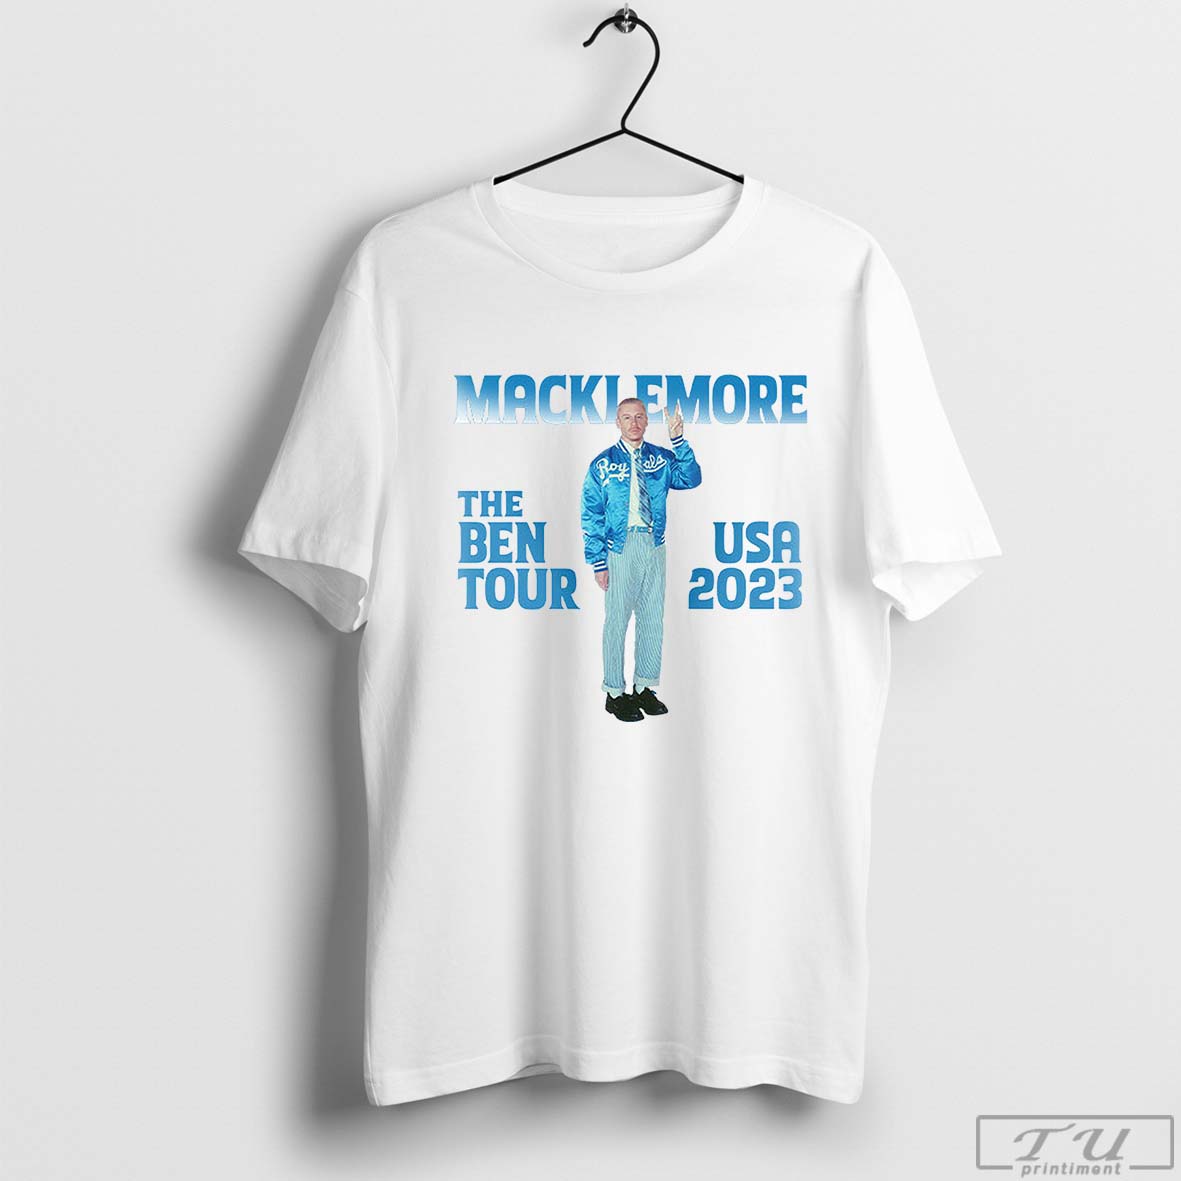 Macklemore The Ben Tour 2023 T-Shirt, Macklemore Tour Shirt for Fan ...